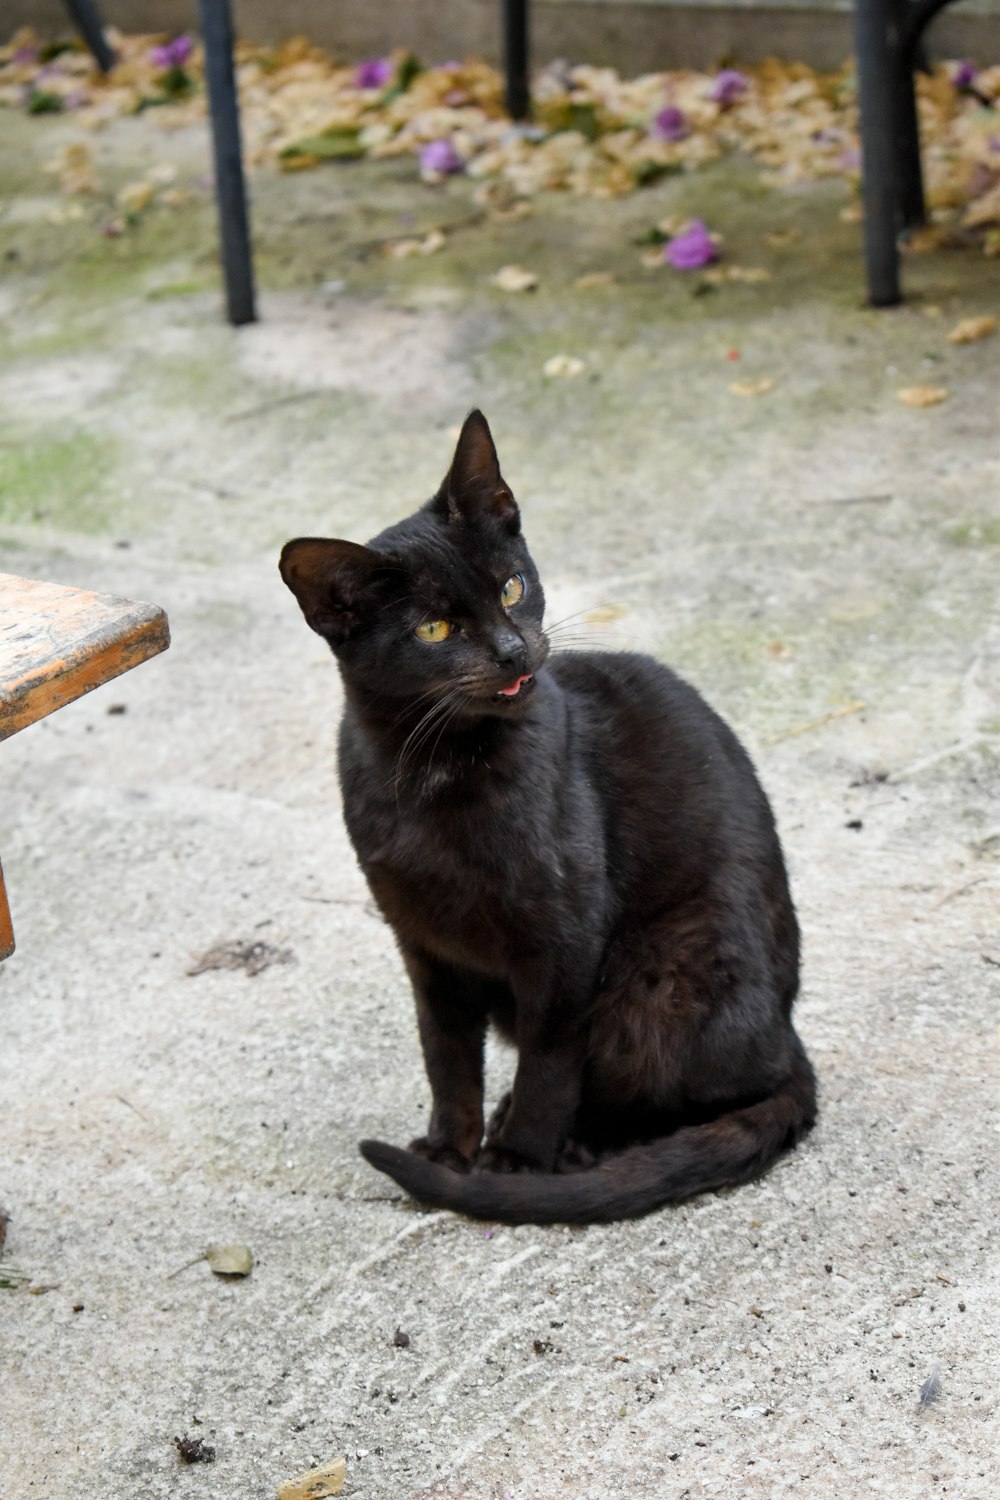 a black cat sitting on a concrete surface